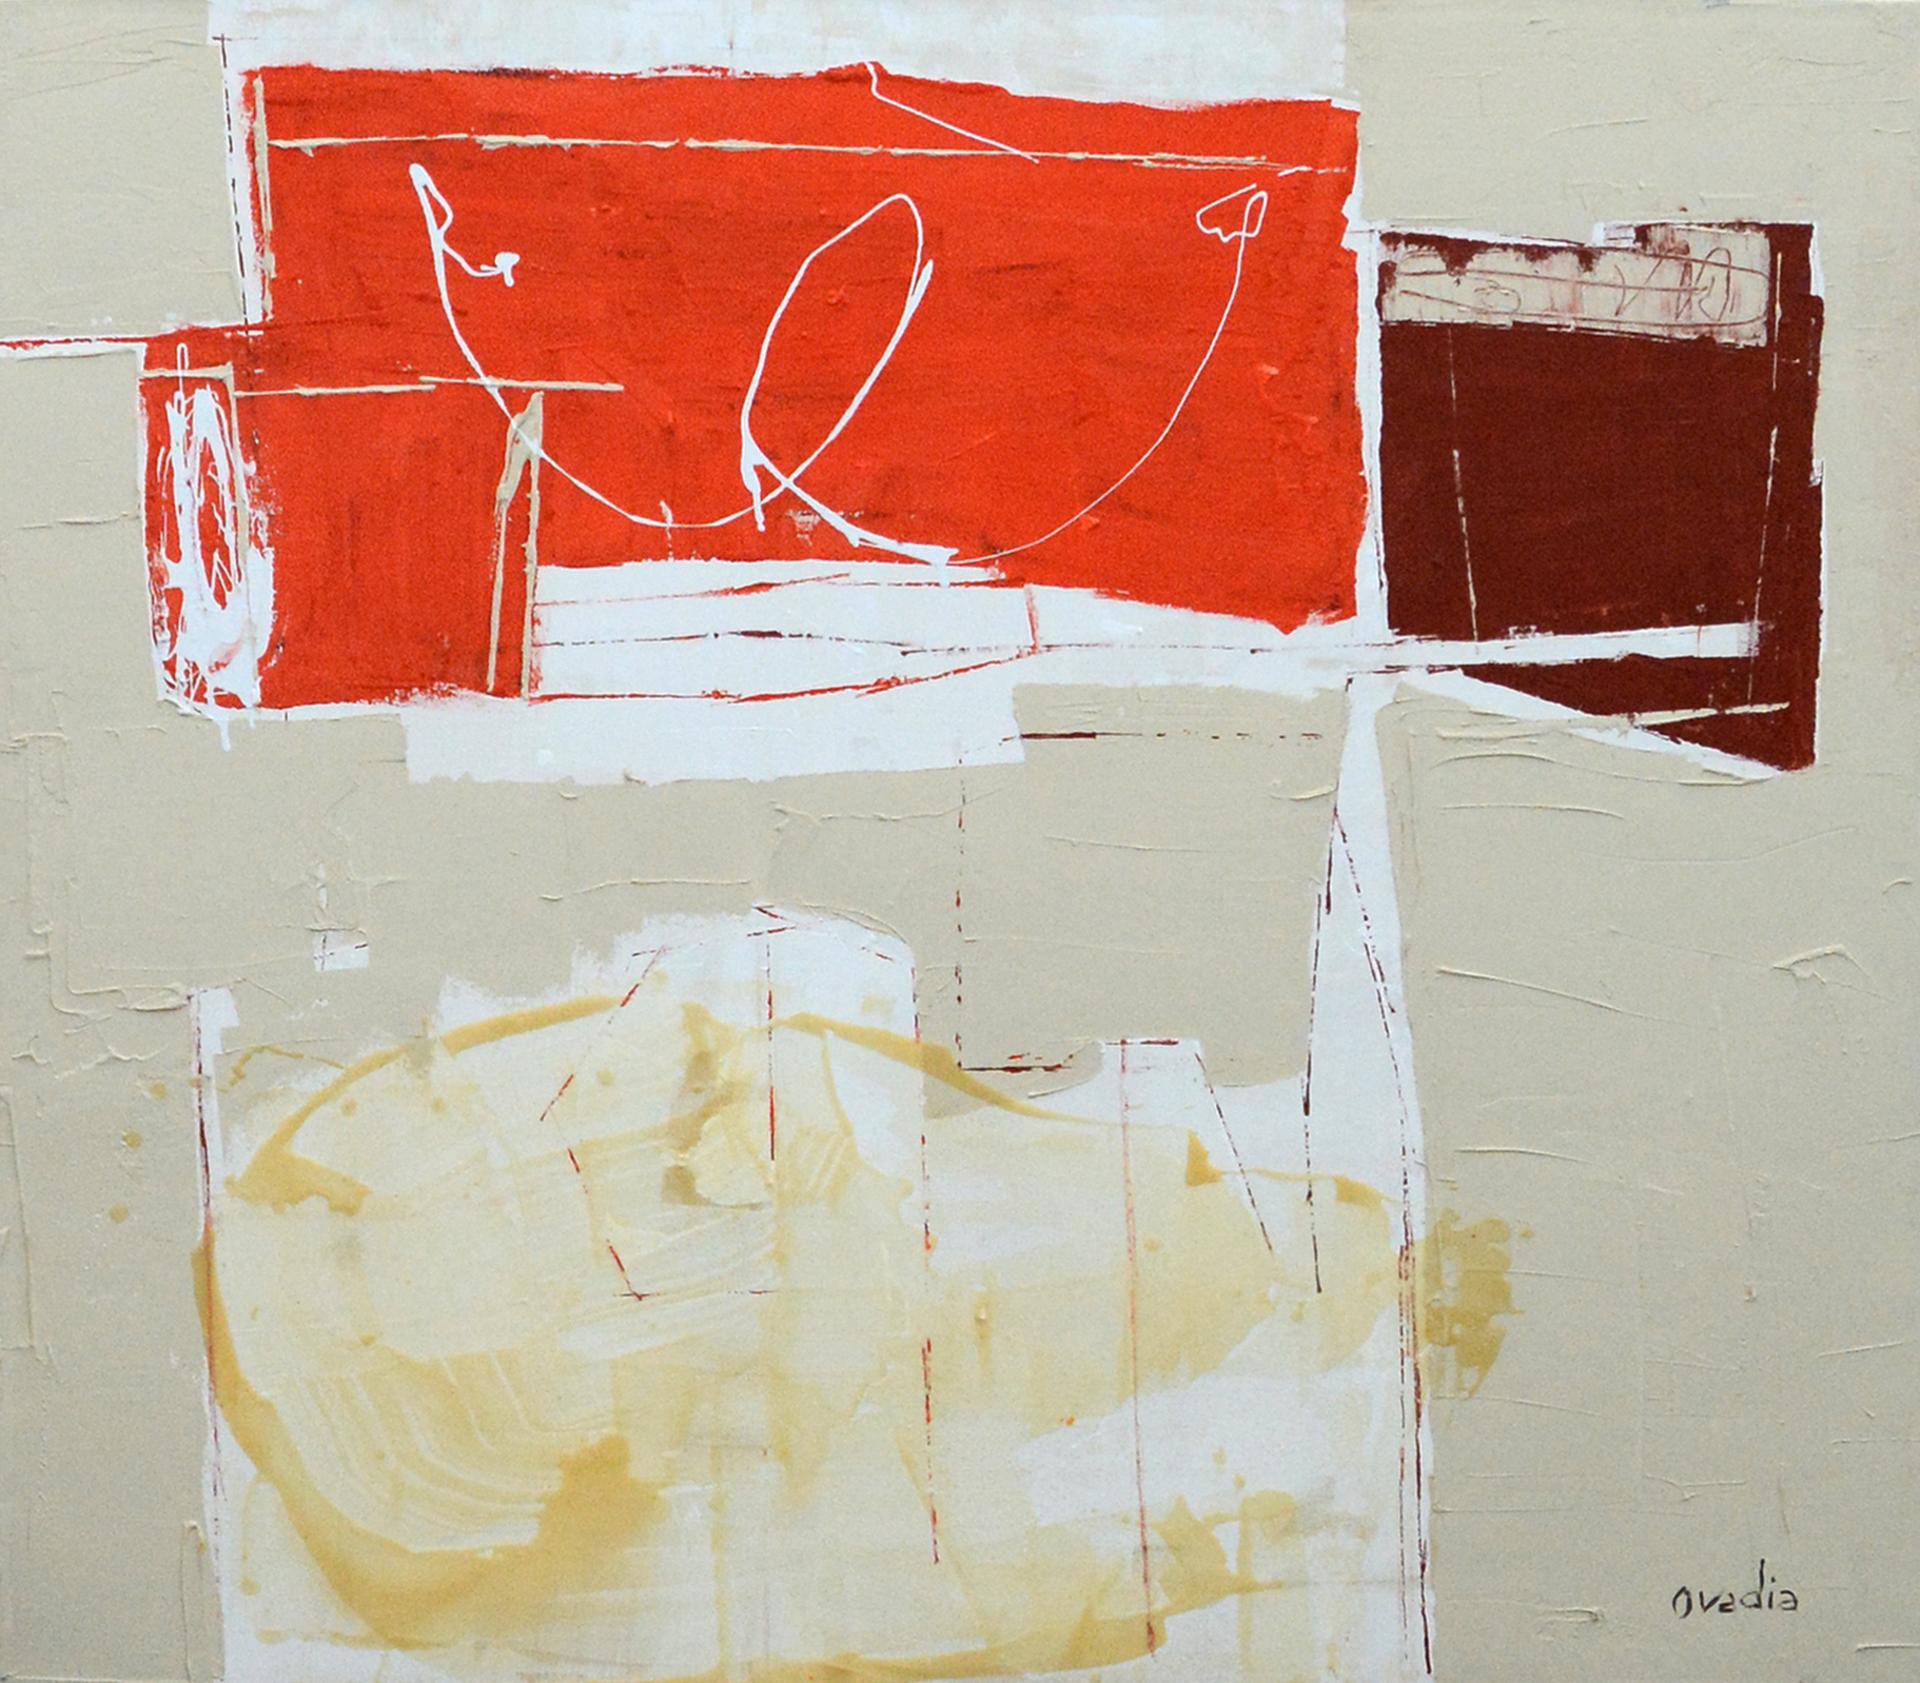 Rachel Ovadia - Composition in Orange, 2004